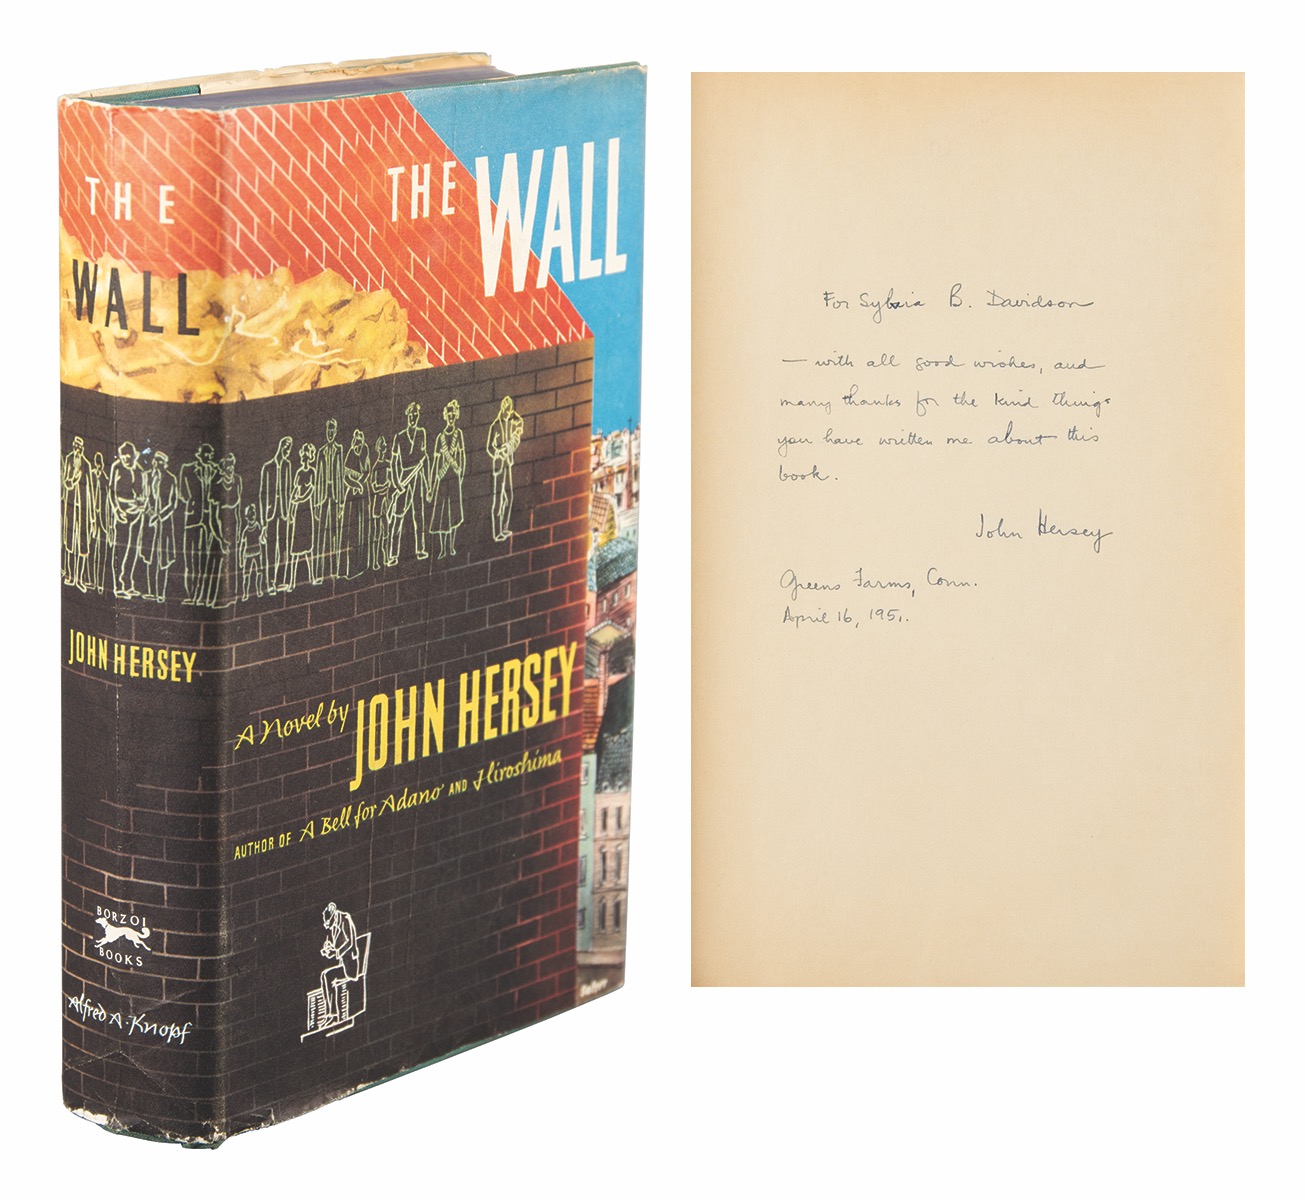 Lot #394 John Hersey Signed Book - Image 1